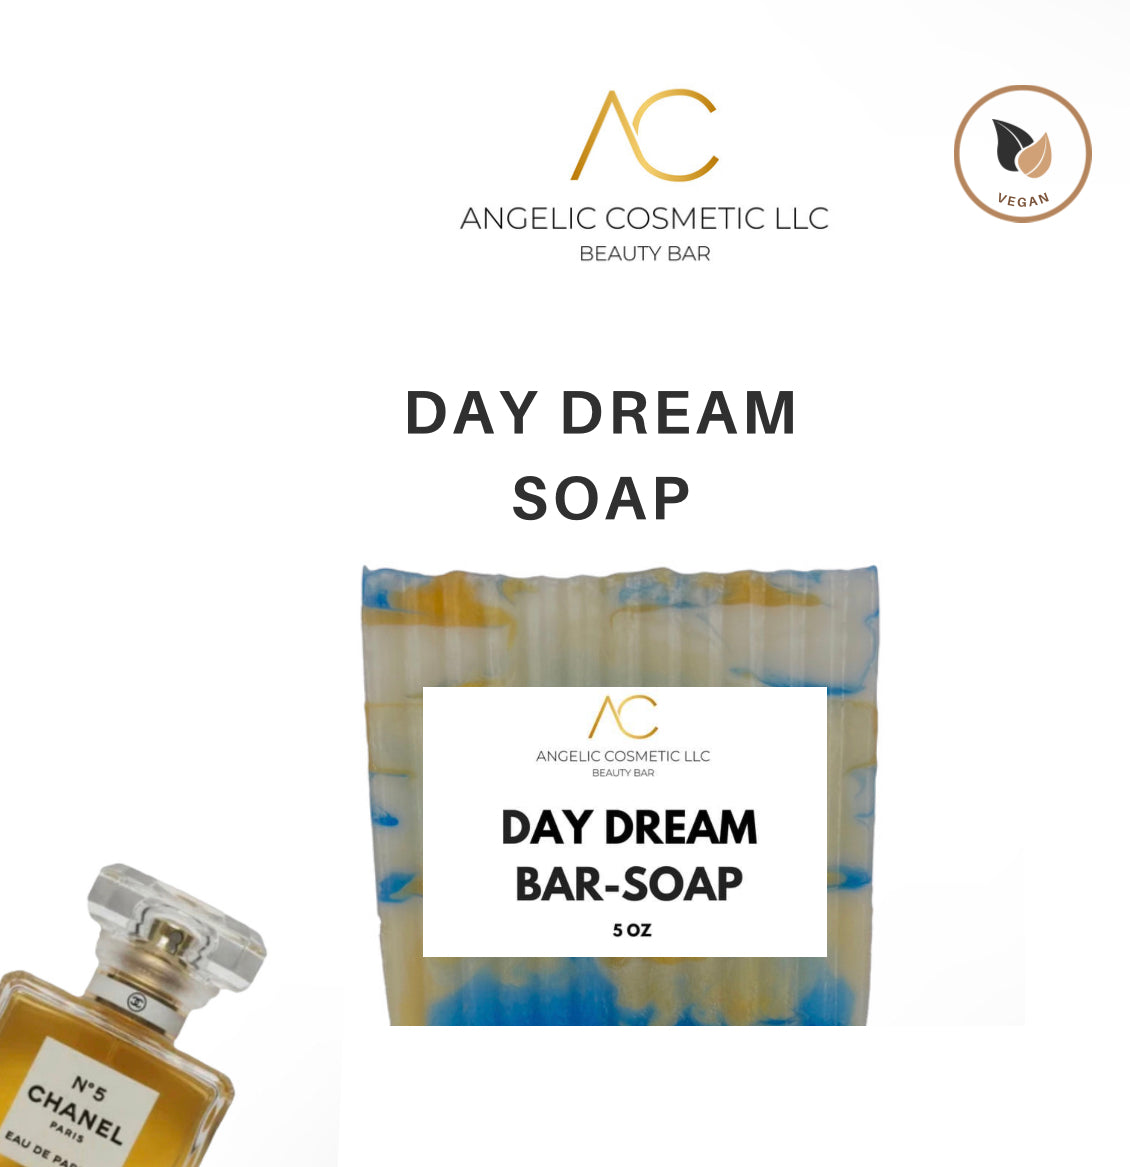 Day Dream – Angelic Cosmetic LLC